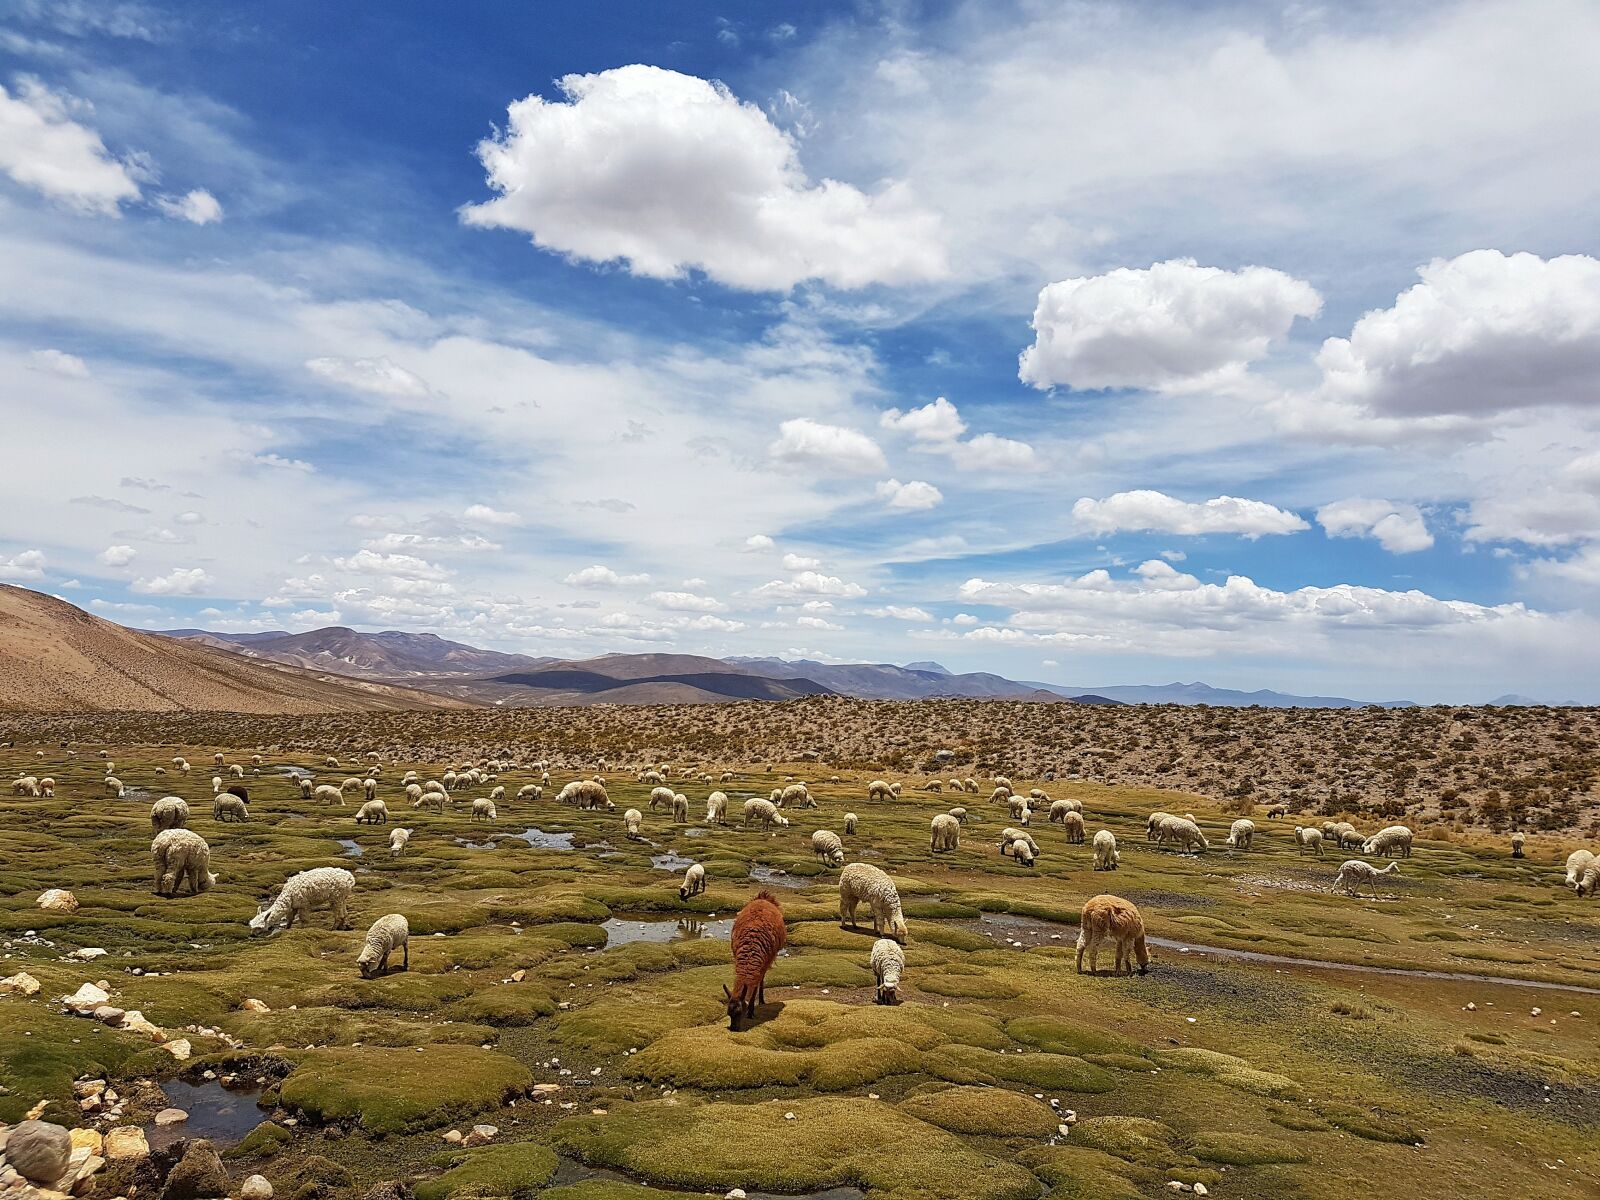 Samsung Galaxy S7 sample photo. Sheep, landscape, animals photography